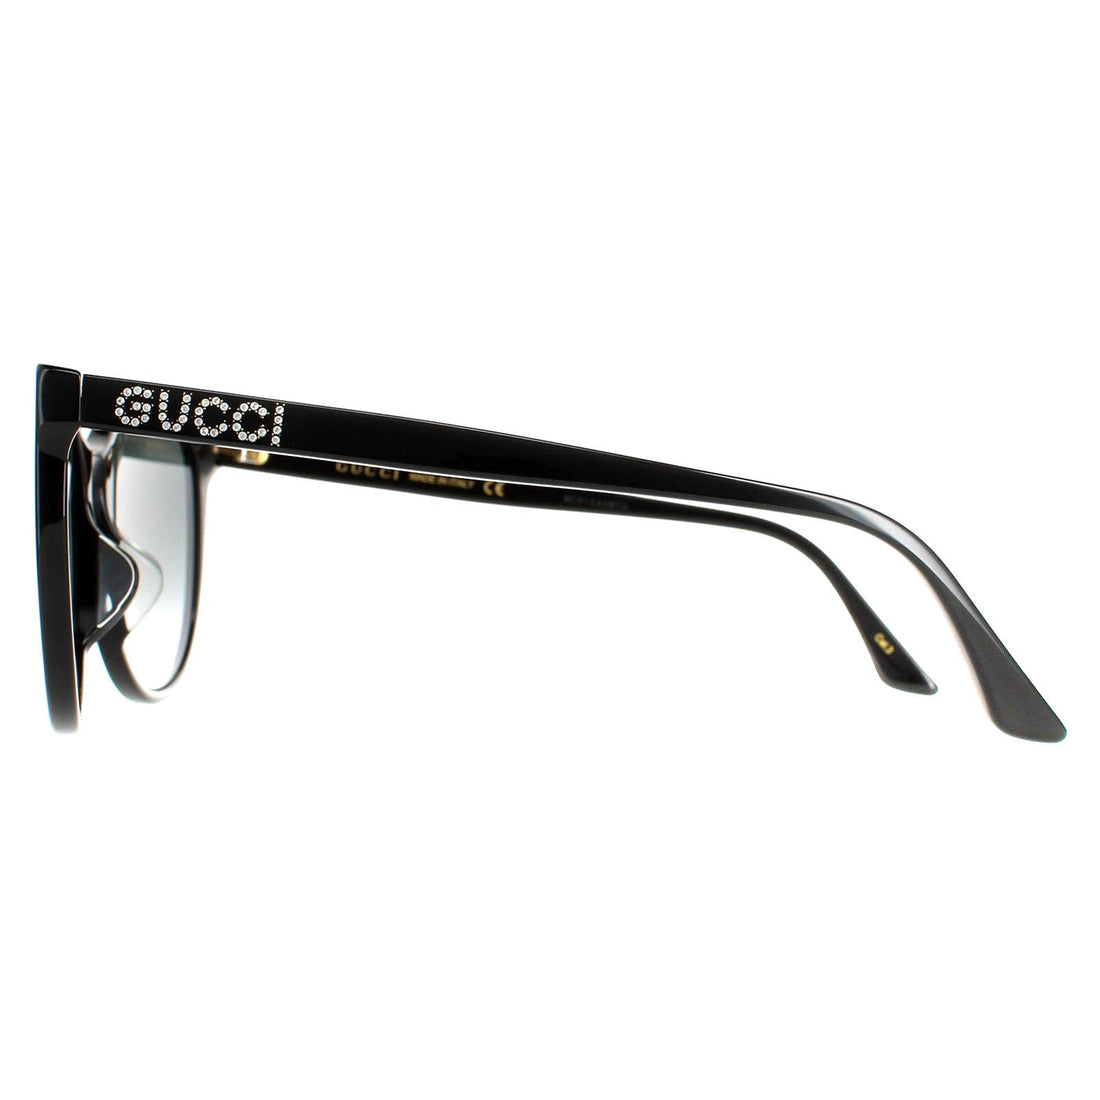 Gucci Sunglasses GG0729SA 001 Shiny Black Grey Gradient